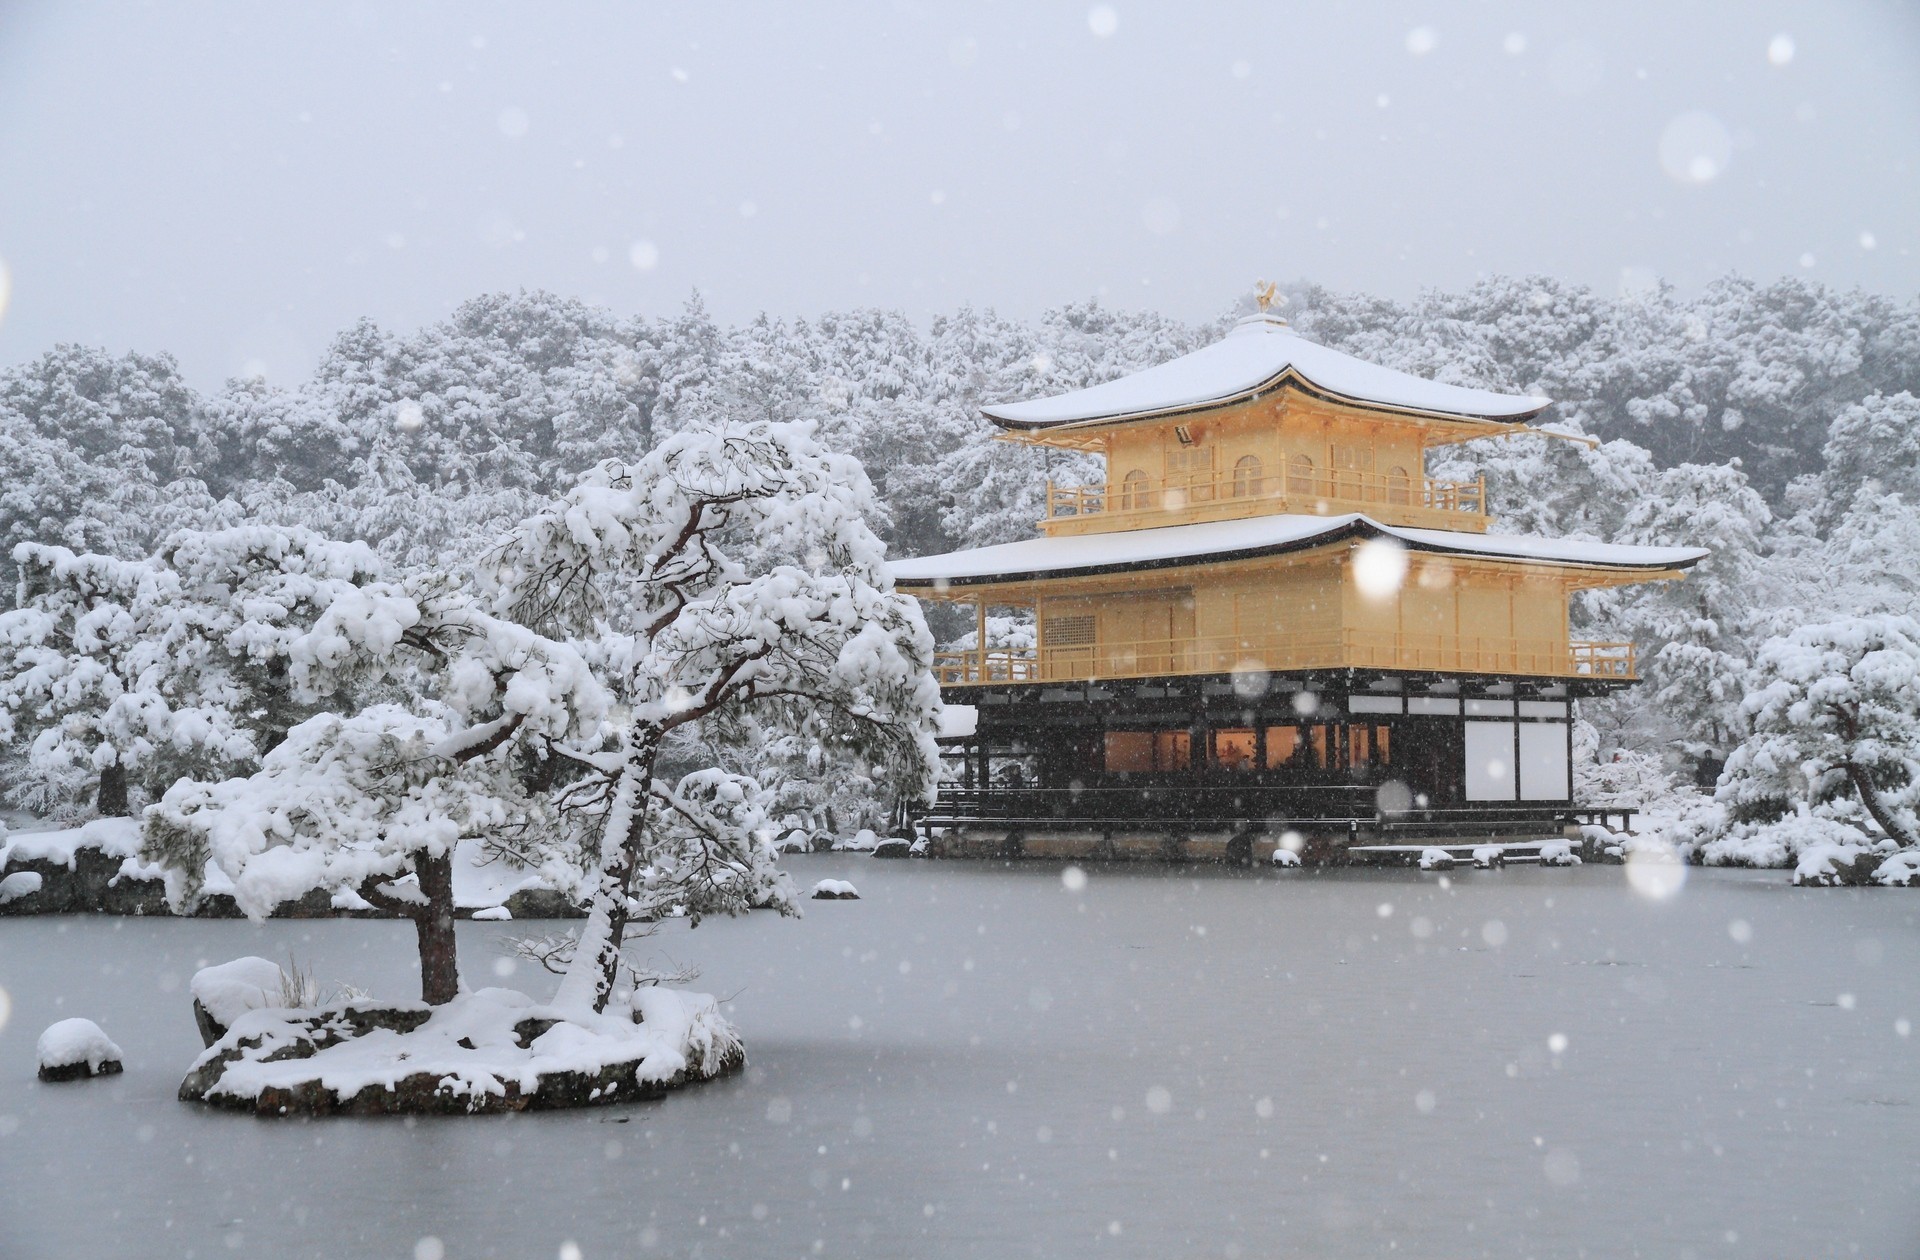 temples, religious, kinkaku ji, japan, kyoto, snowfall, the temple of the golden pavilion